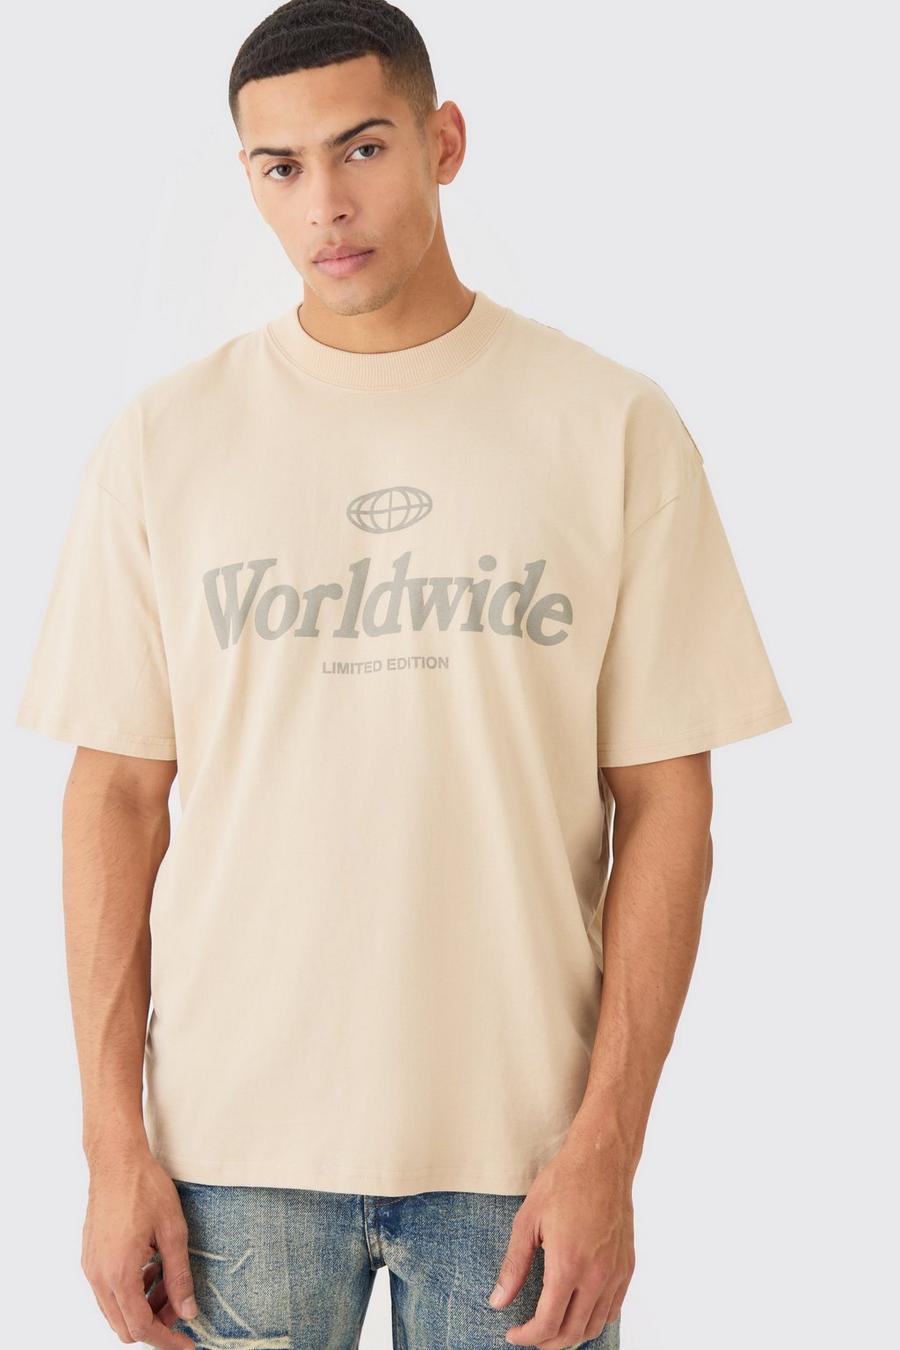 Camiseta oversize Worldwide, Sand